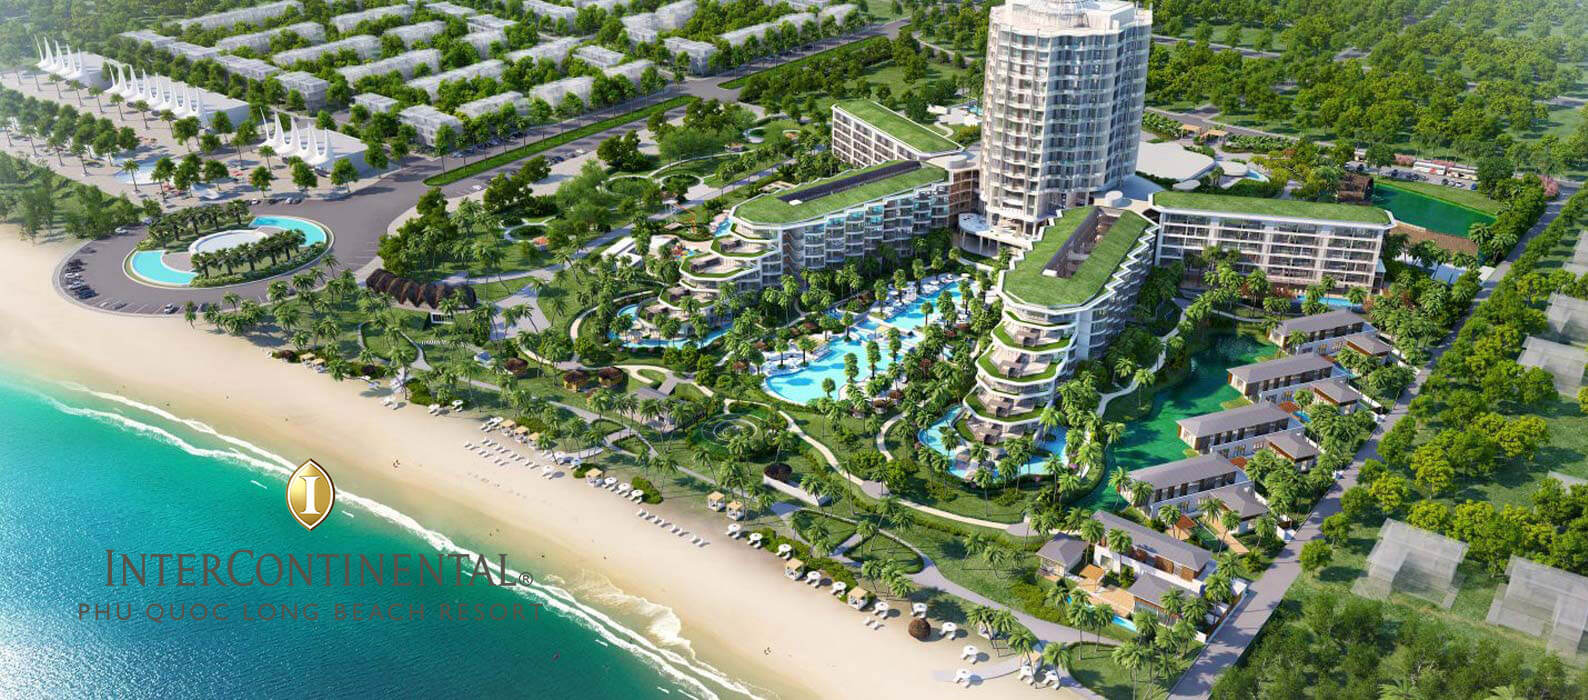 InterContinental Phu Quoc Long Beach resort